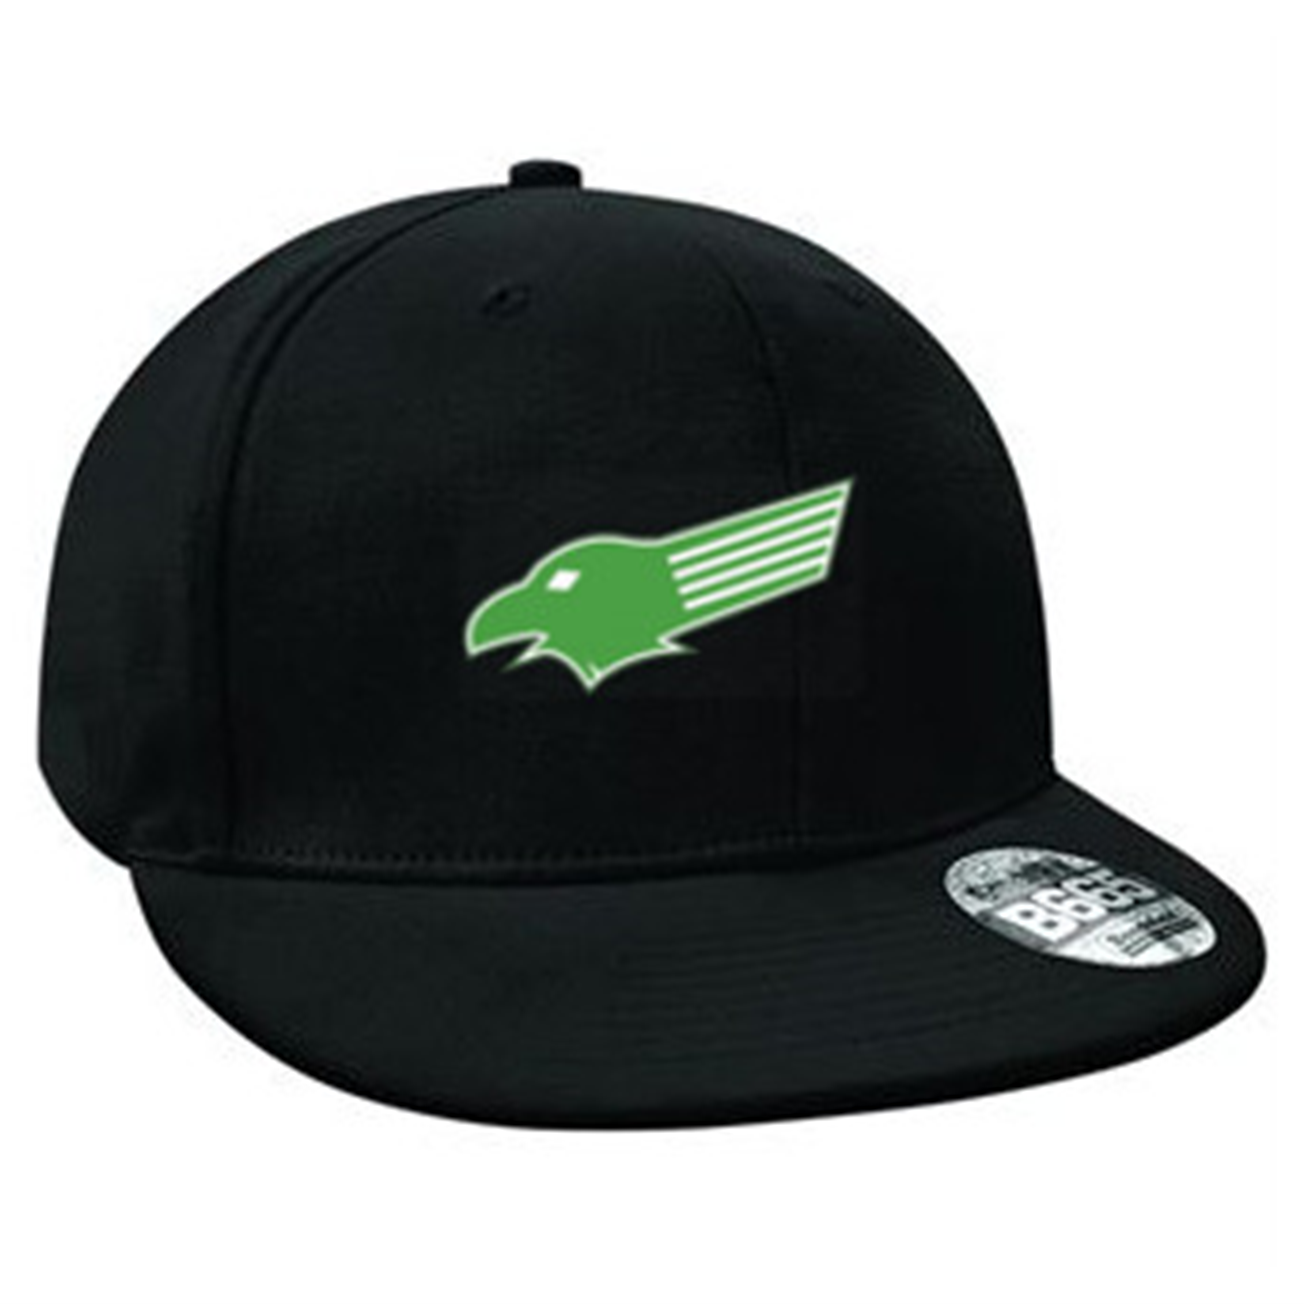 Kewford Eagles Snap Back Cap [Black]